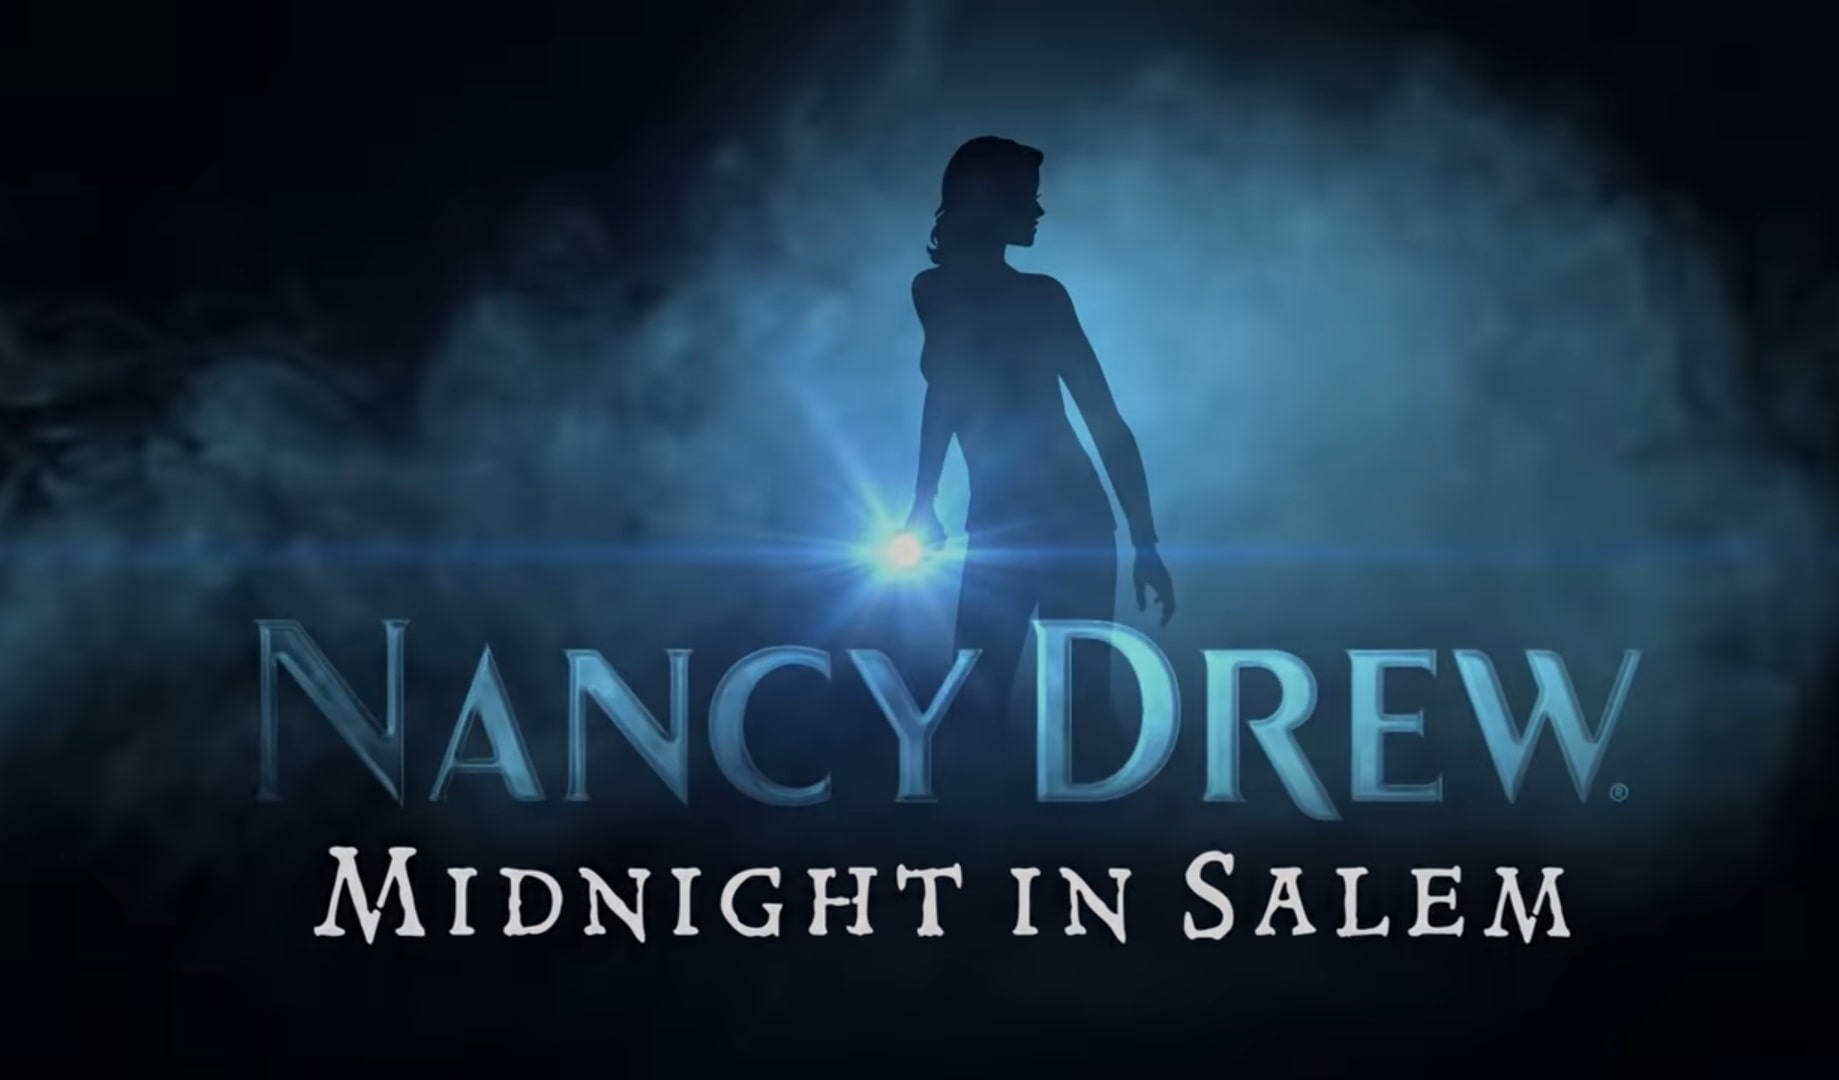 Nancy Drew: Midnight in Salem ► Преступление и наказание ► Финал #4 (стрим)